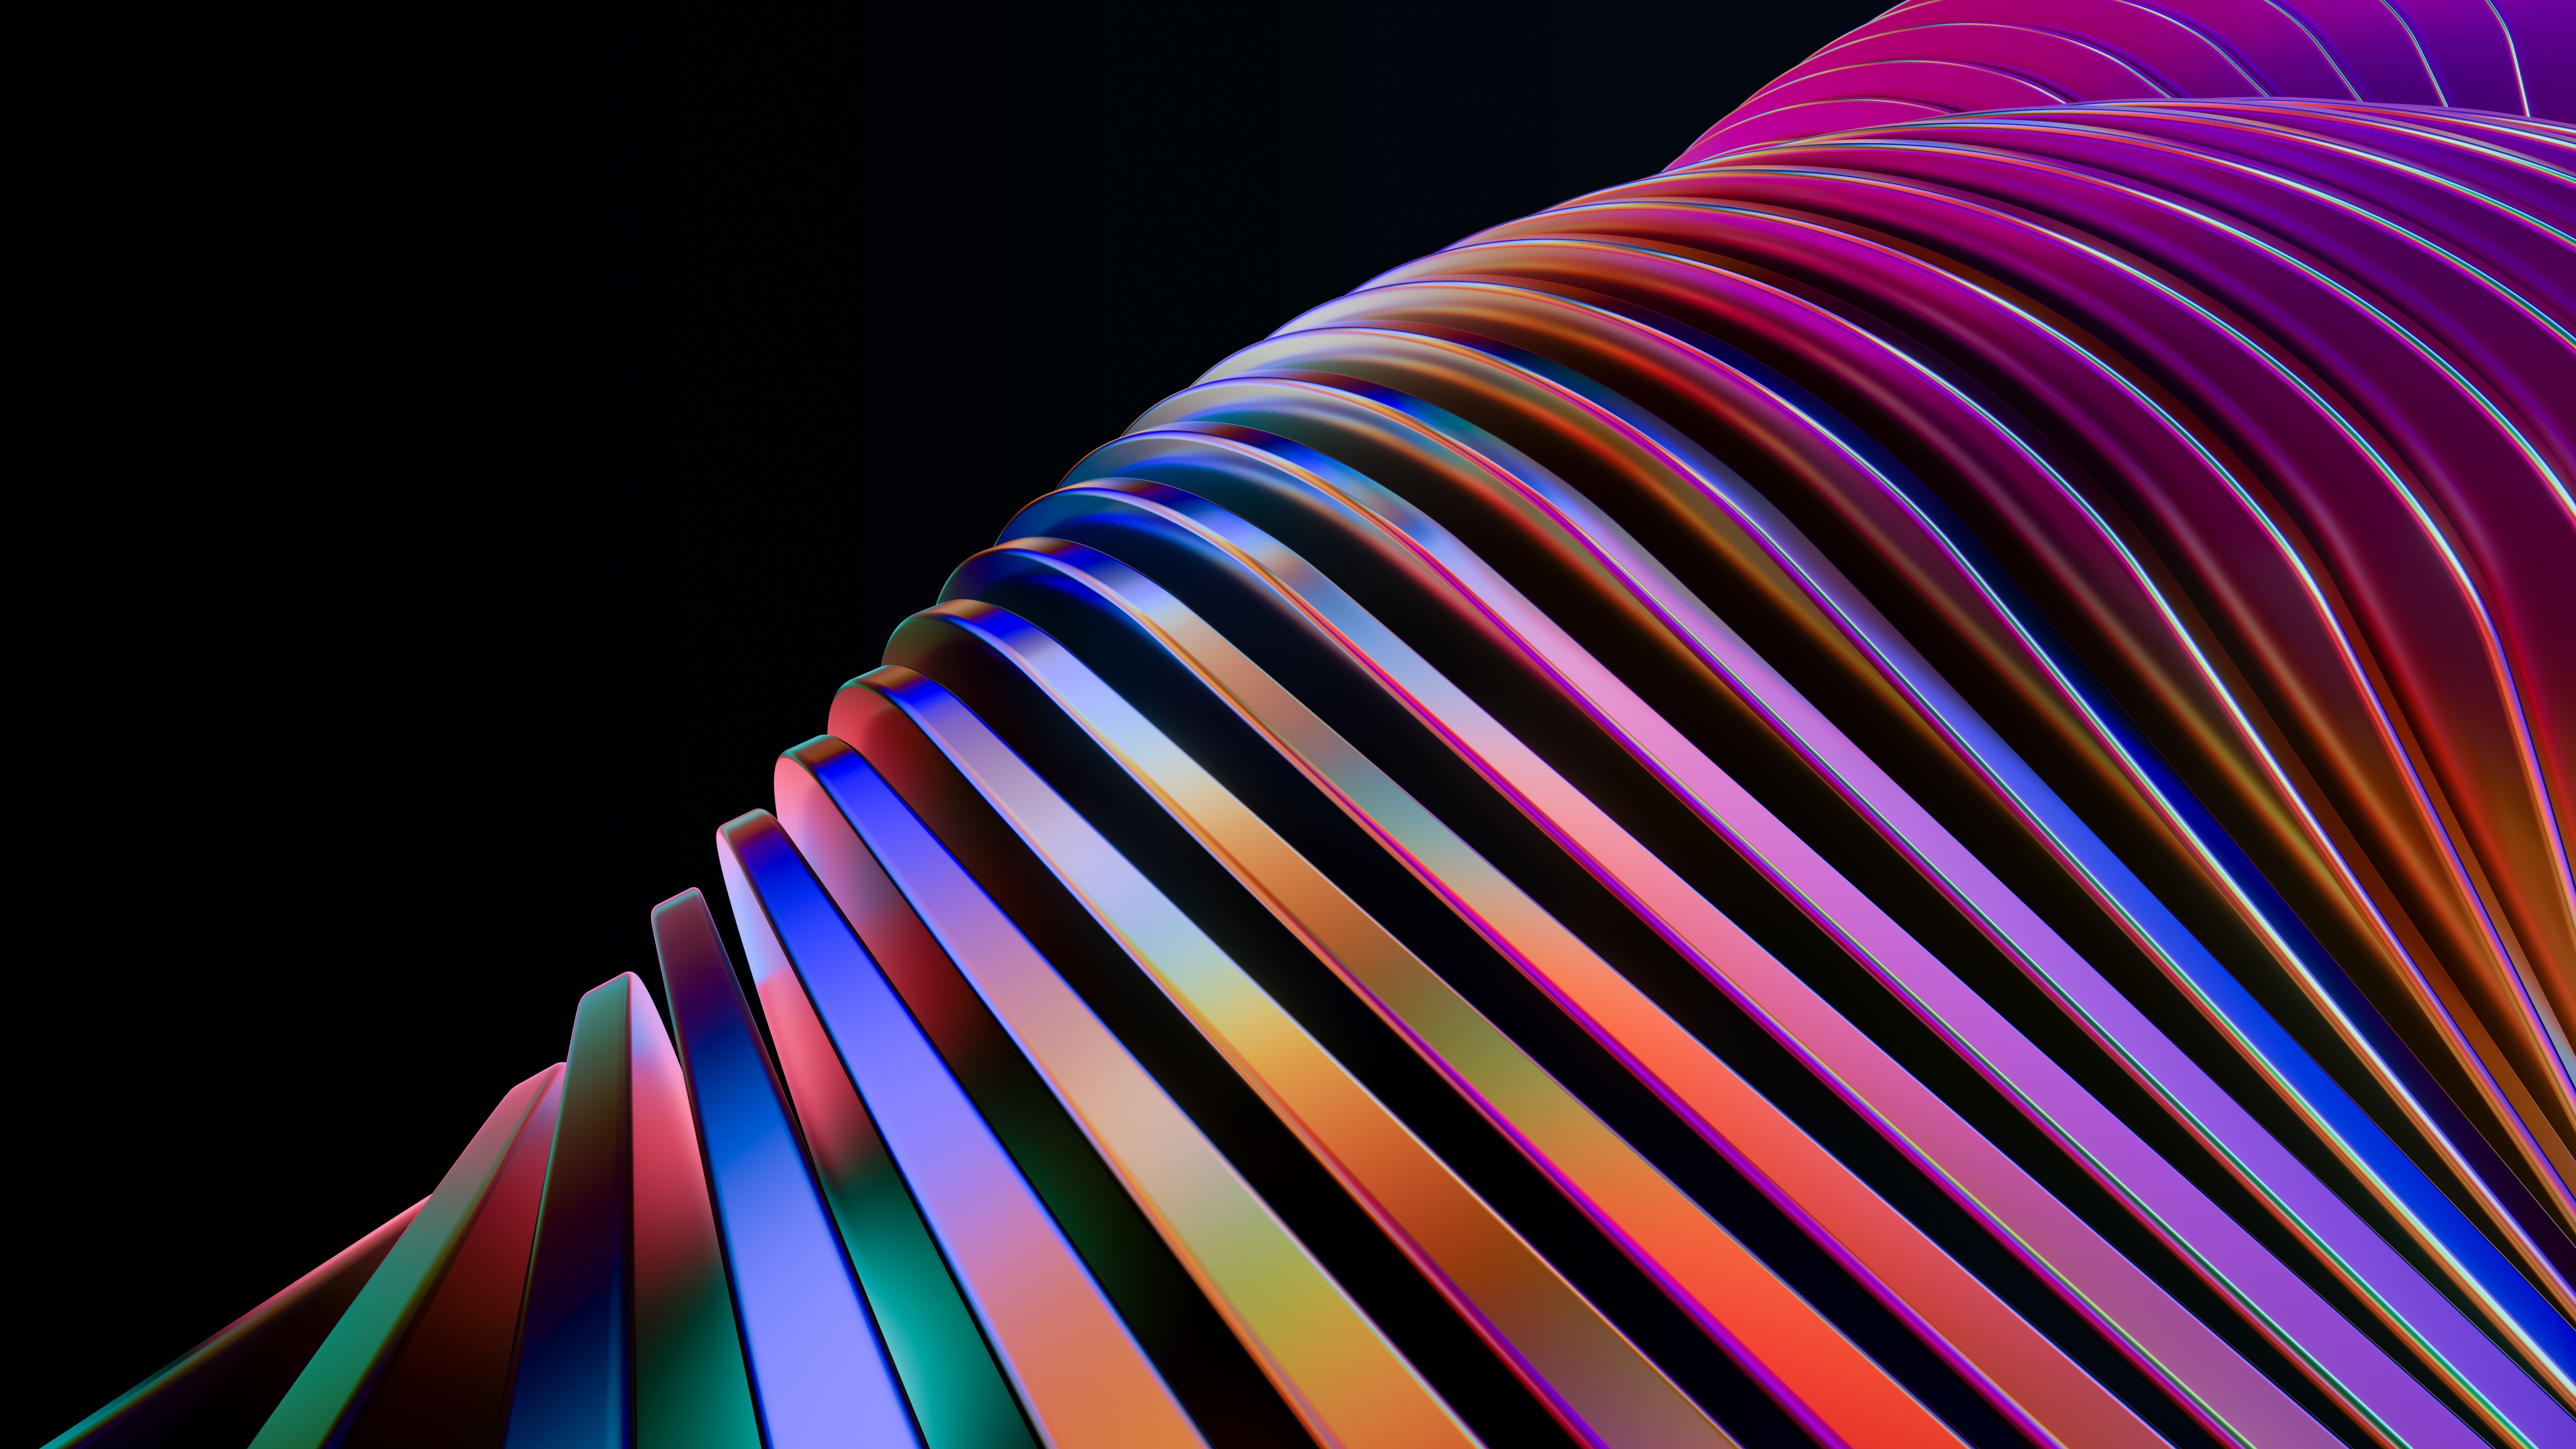 HD wallpaper, Rainbow Swirl, 3D Art, Vibrant, Black Background, 5K